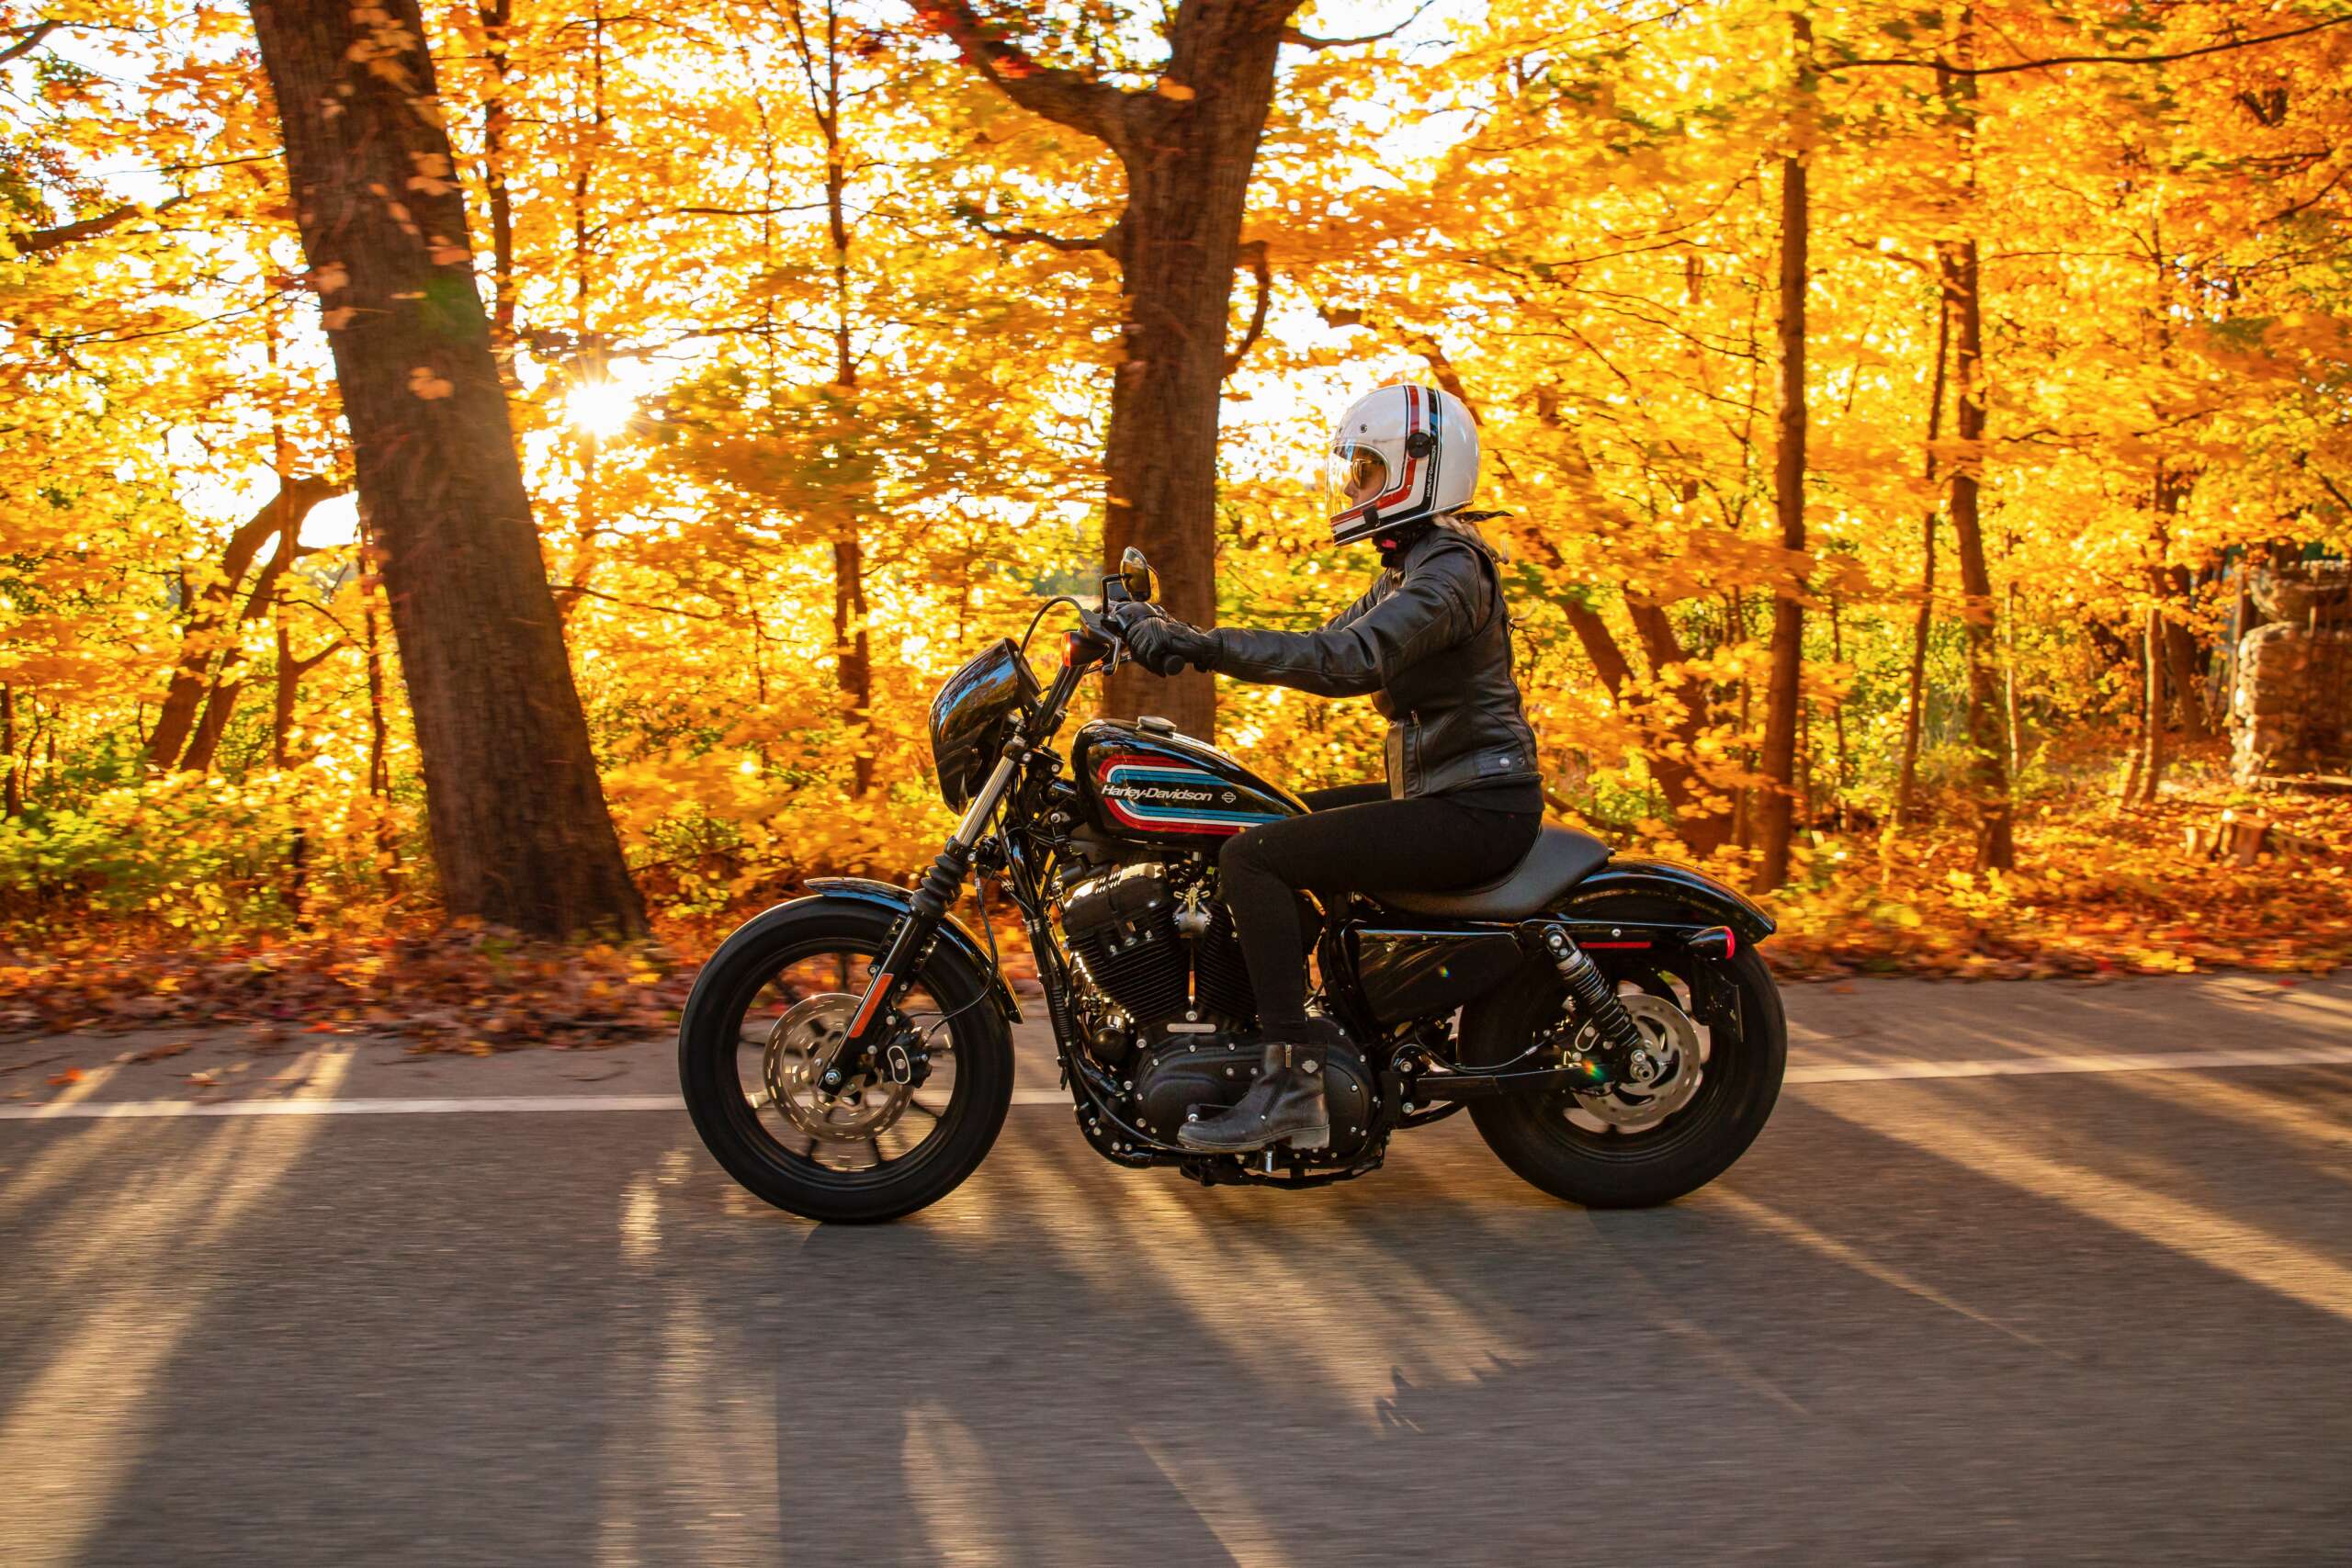 2021 Harley-Davidson Iron 1200 Guide • Total Motorcycle
